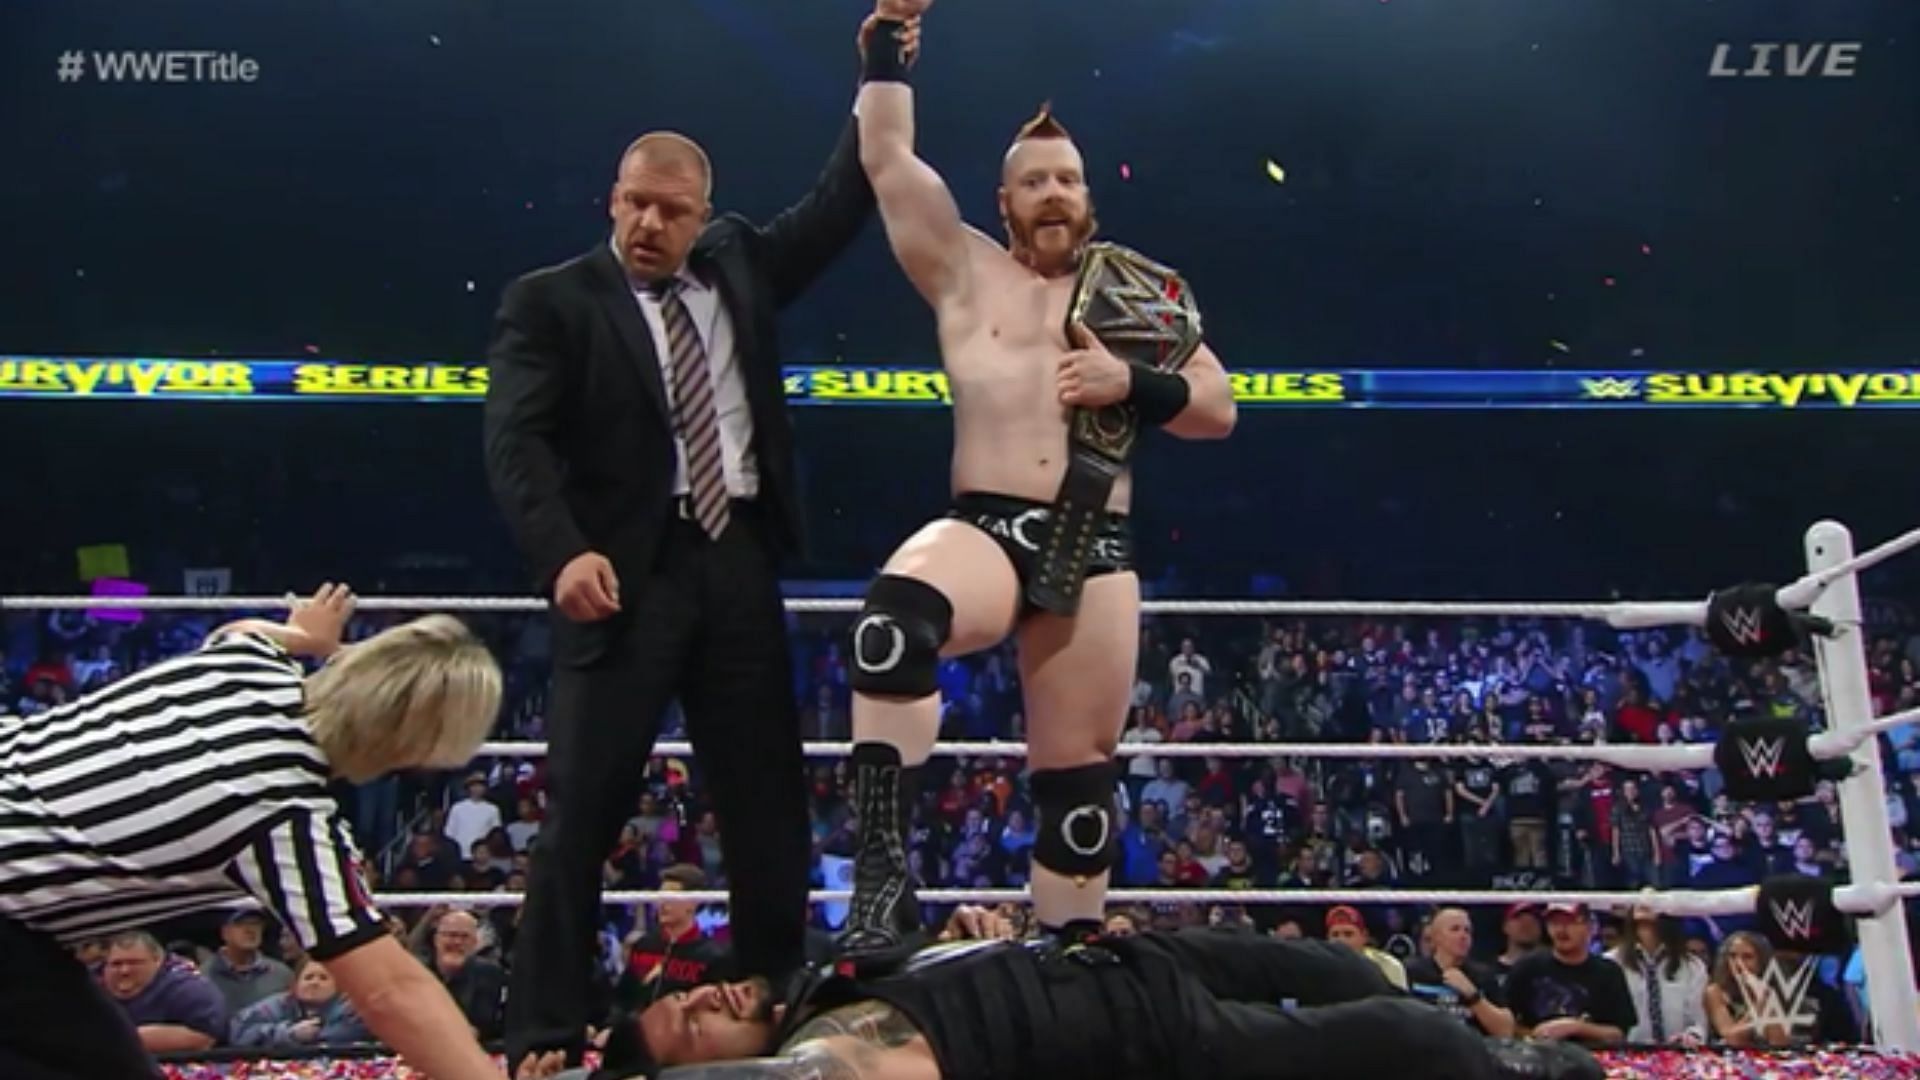 Sheamus wins his third WWE Championship at Survivor Series 2015.